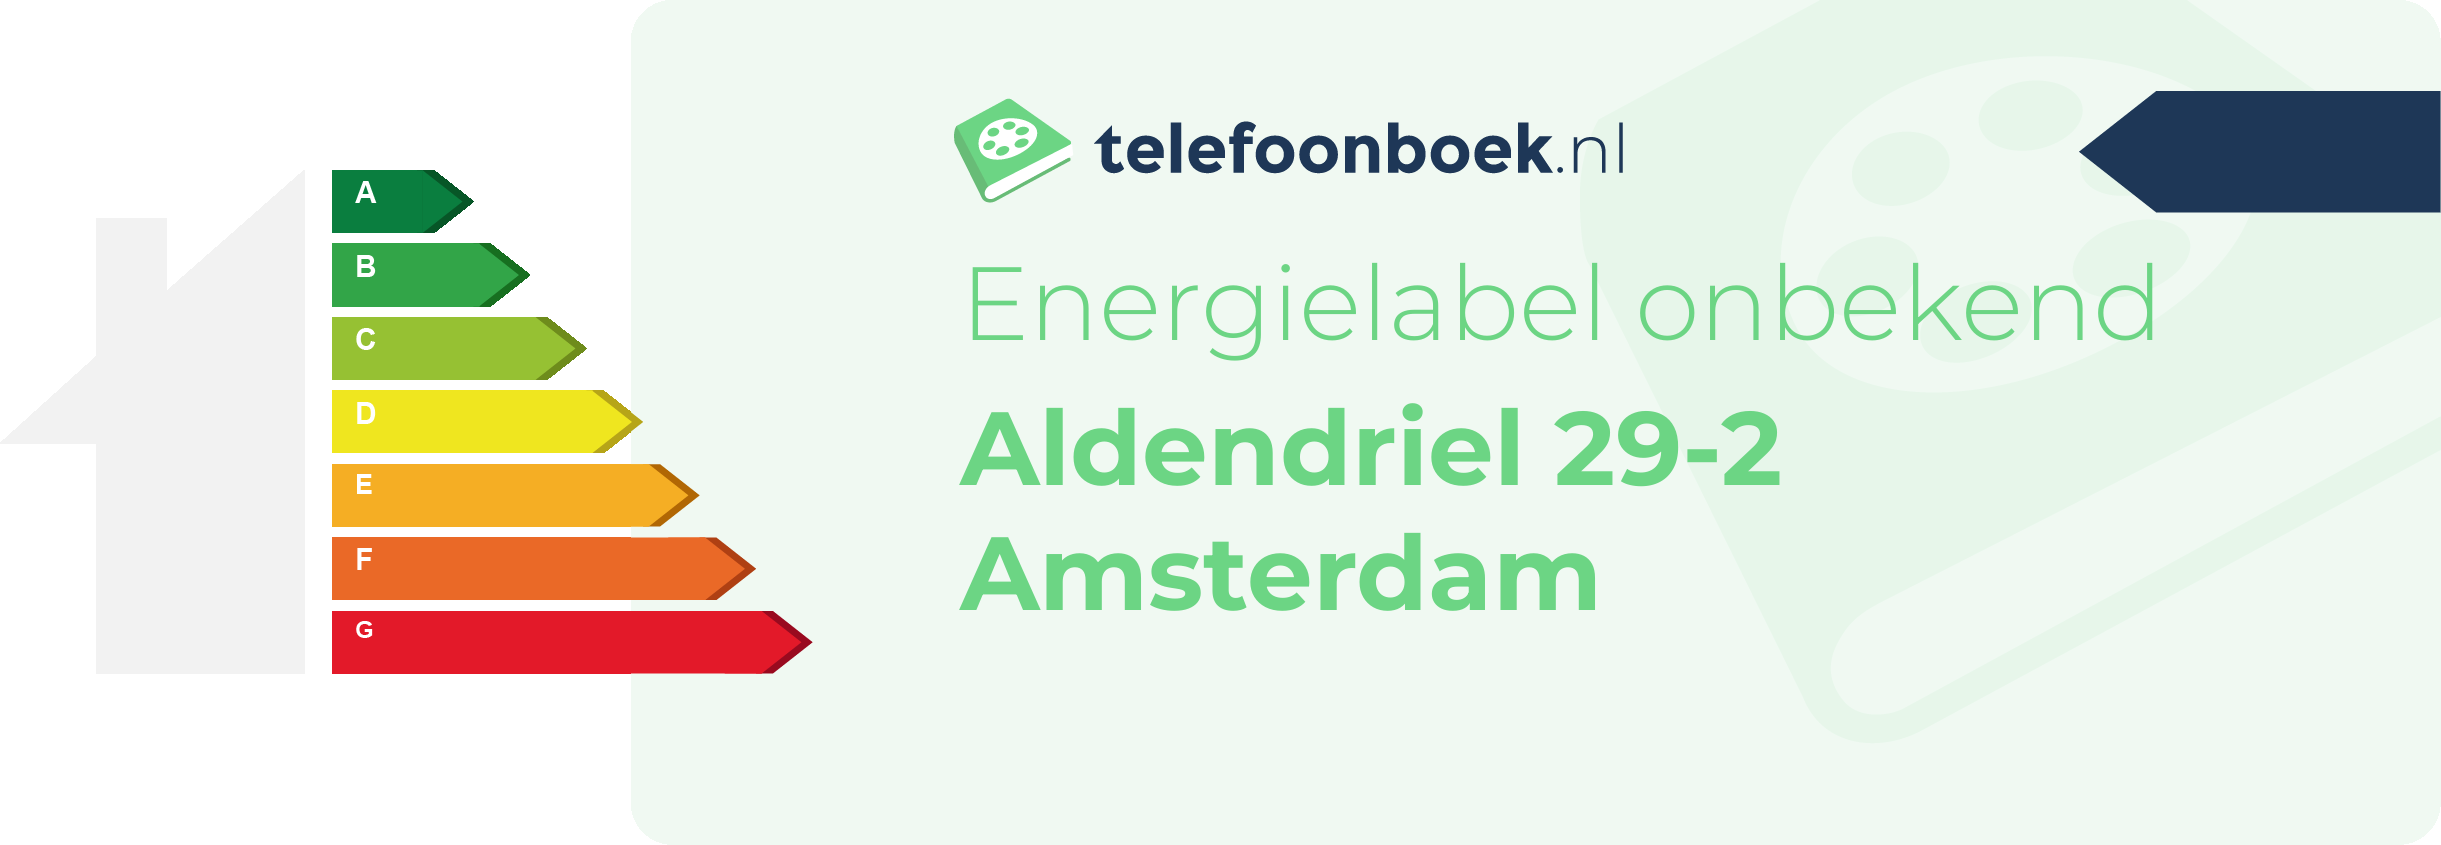 Energielabel Aldendriel 29-2 Amsterdam